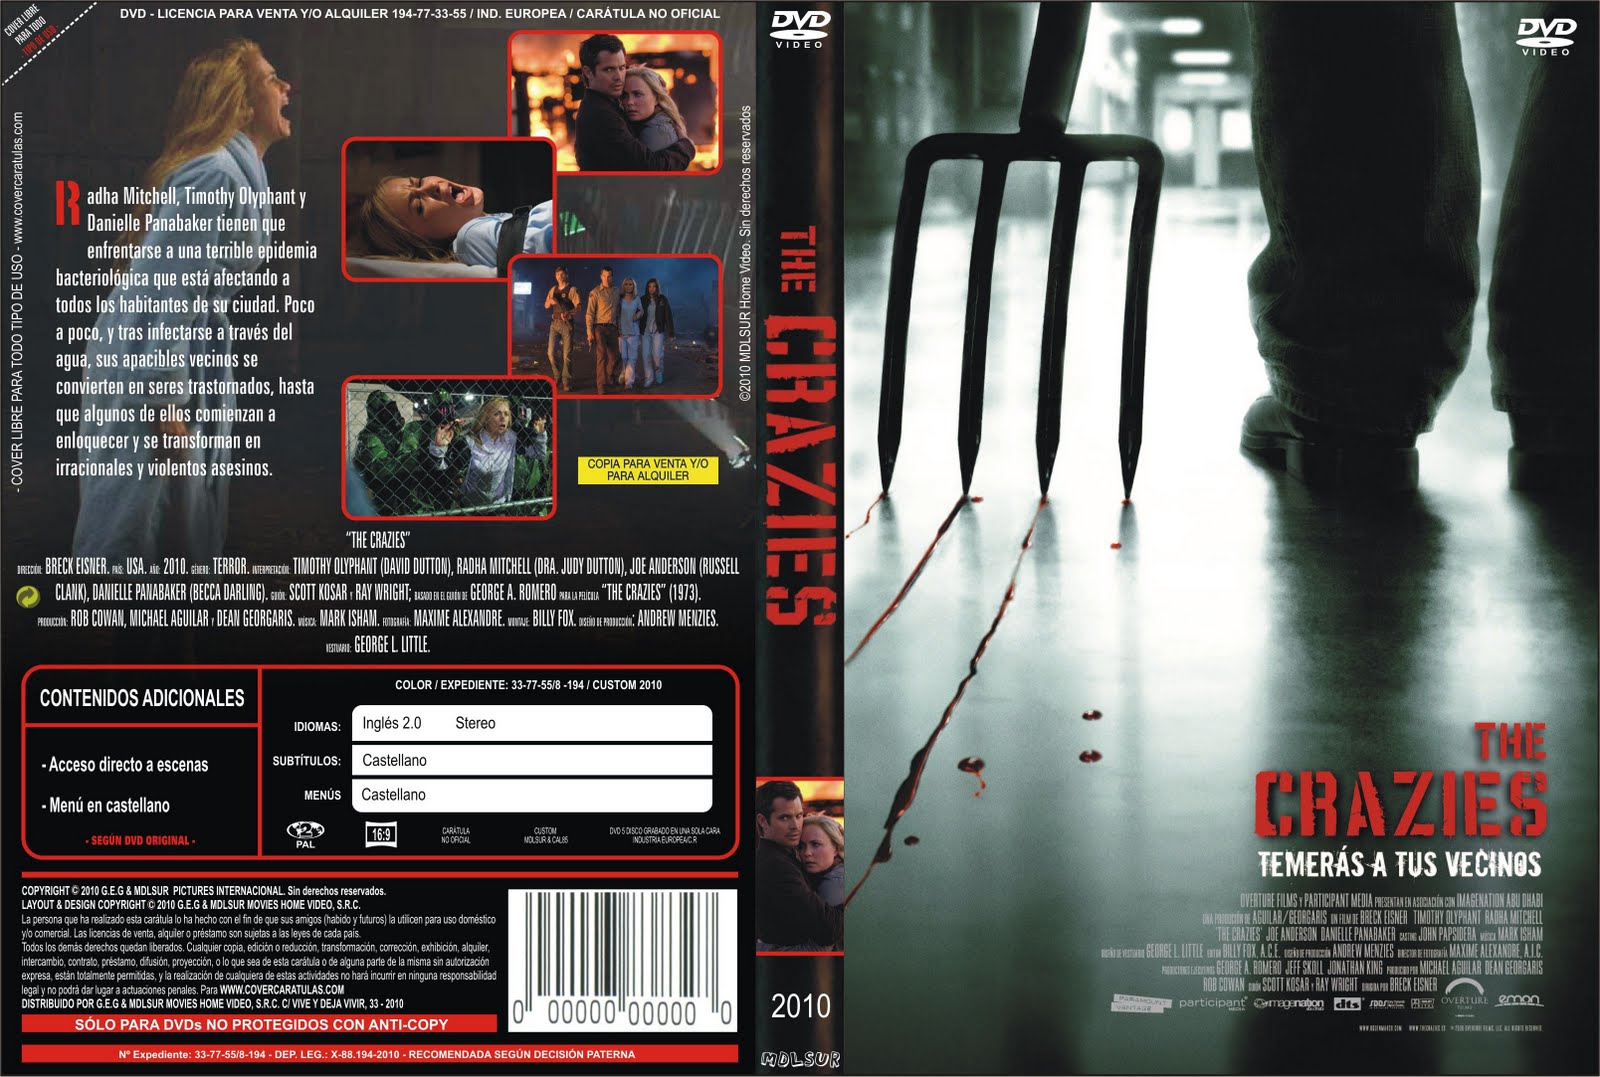 Stiahni si Filmy DVD  Podivni / The Crazies (2010)(CZ/EN)